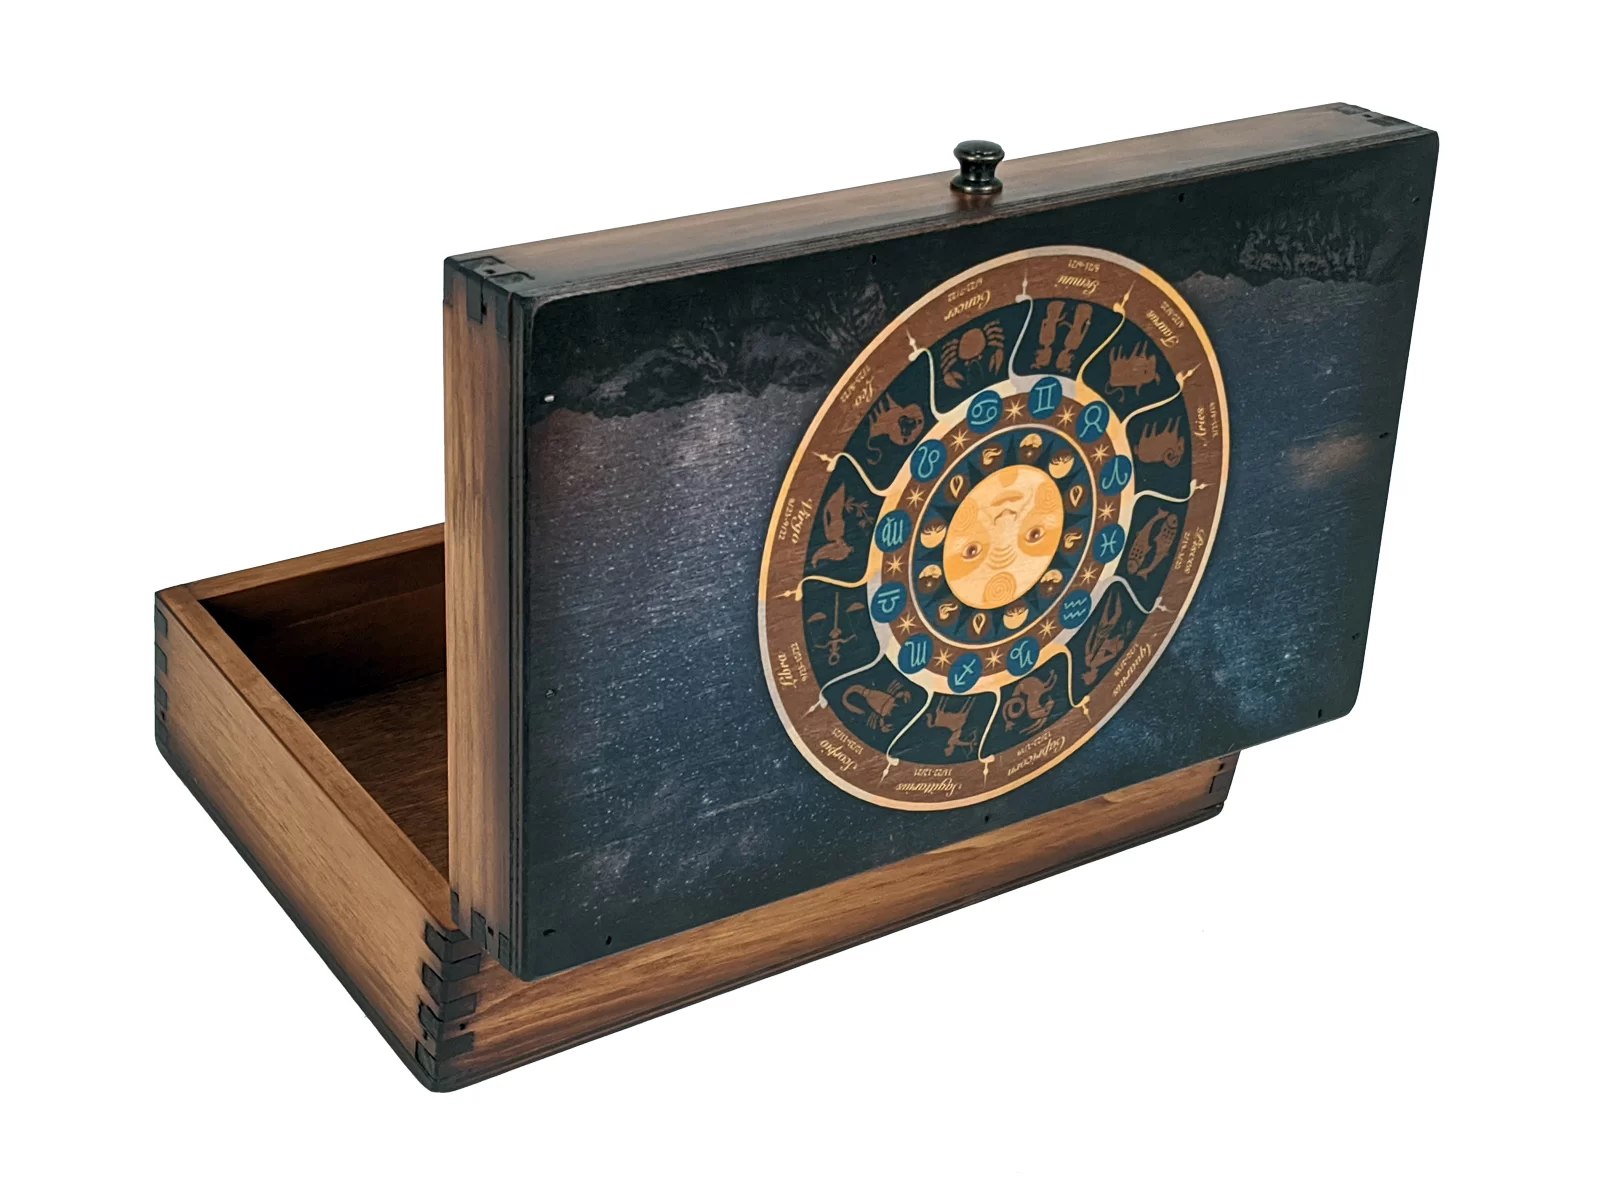 Astrology Chart Gift